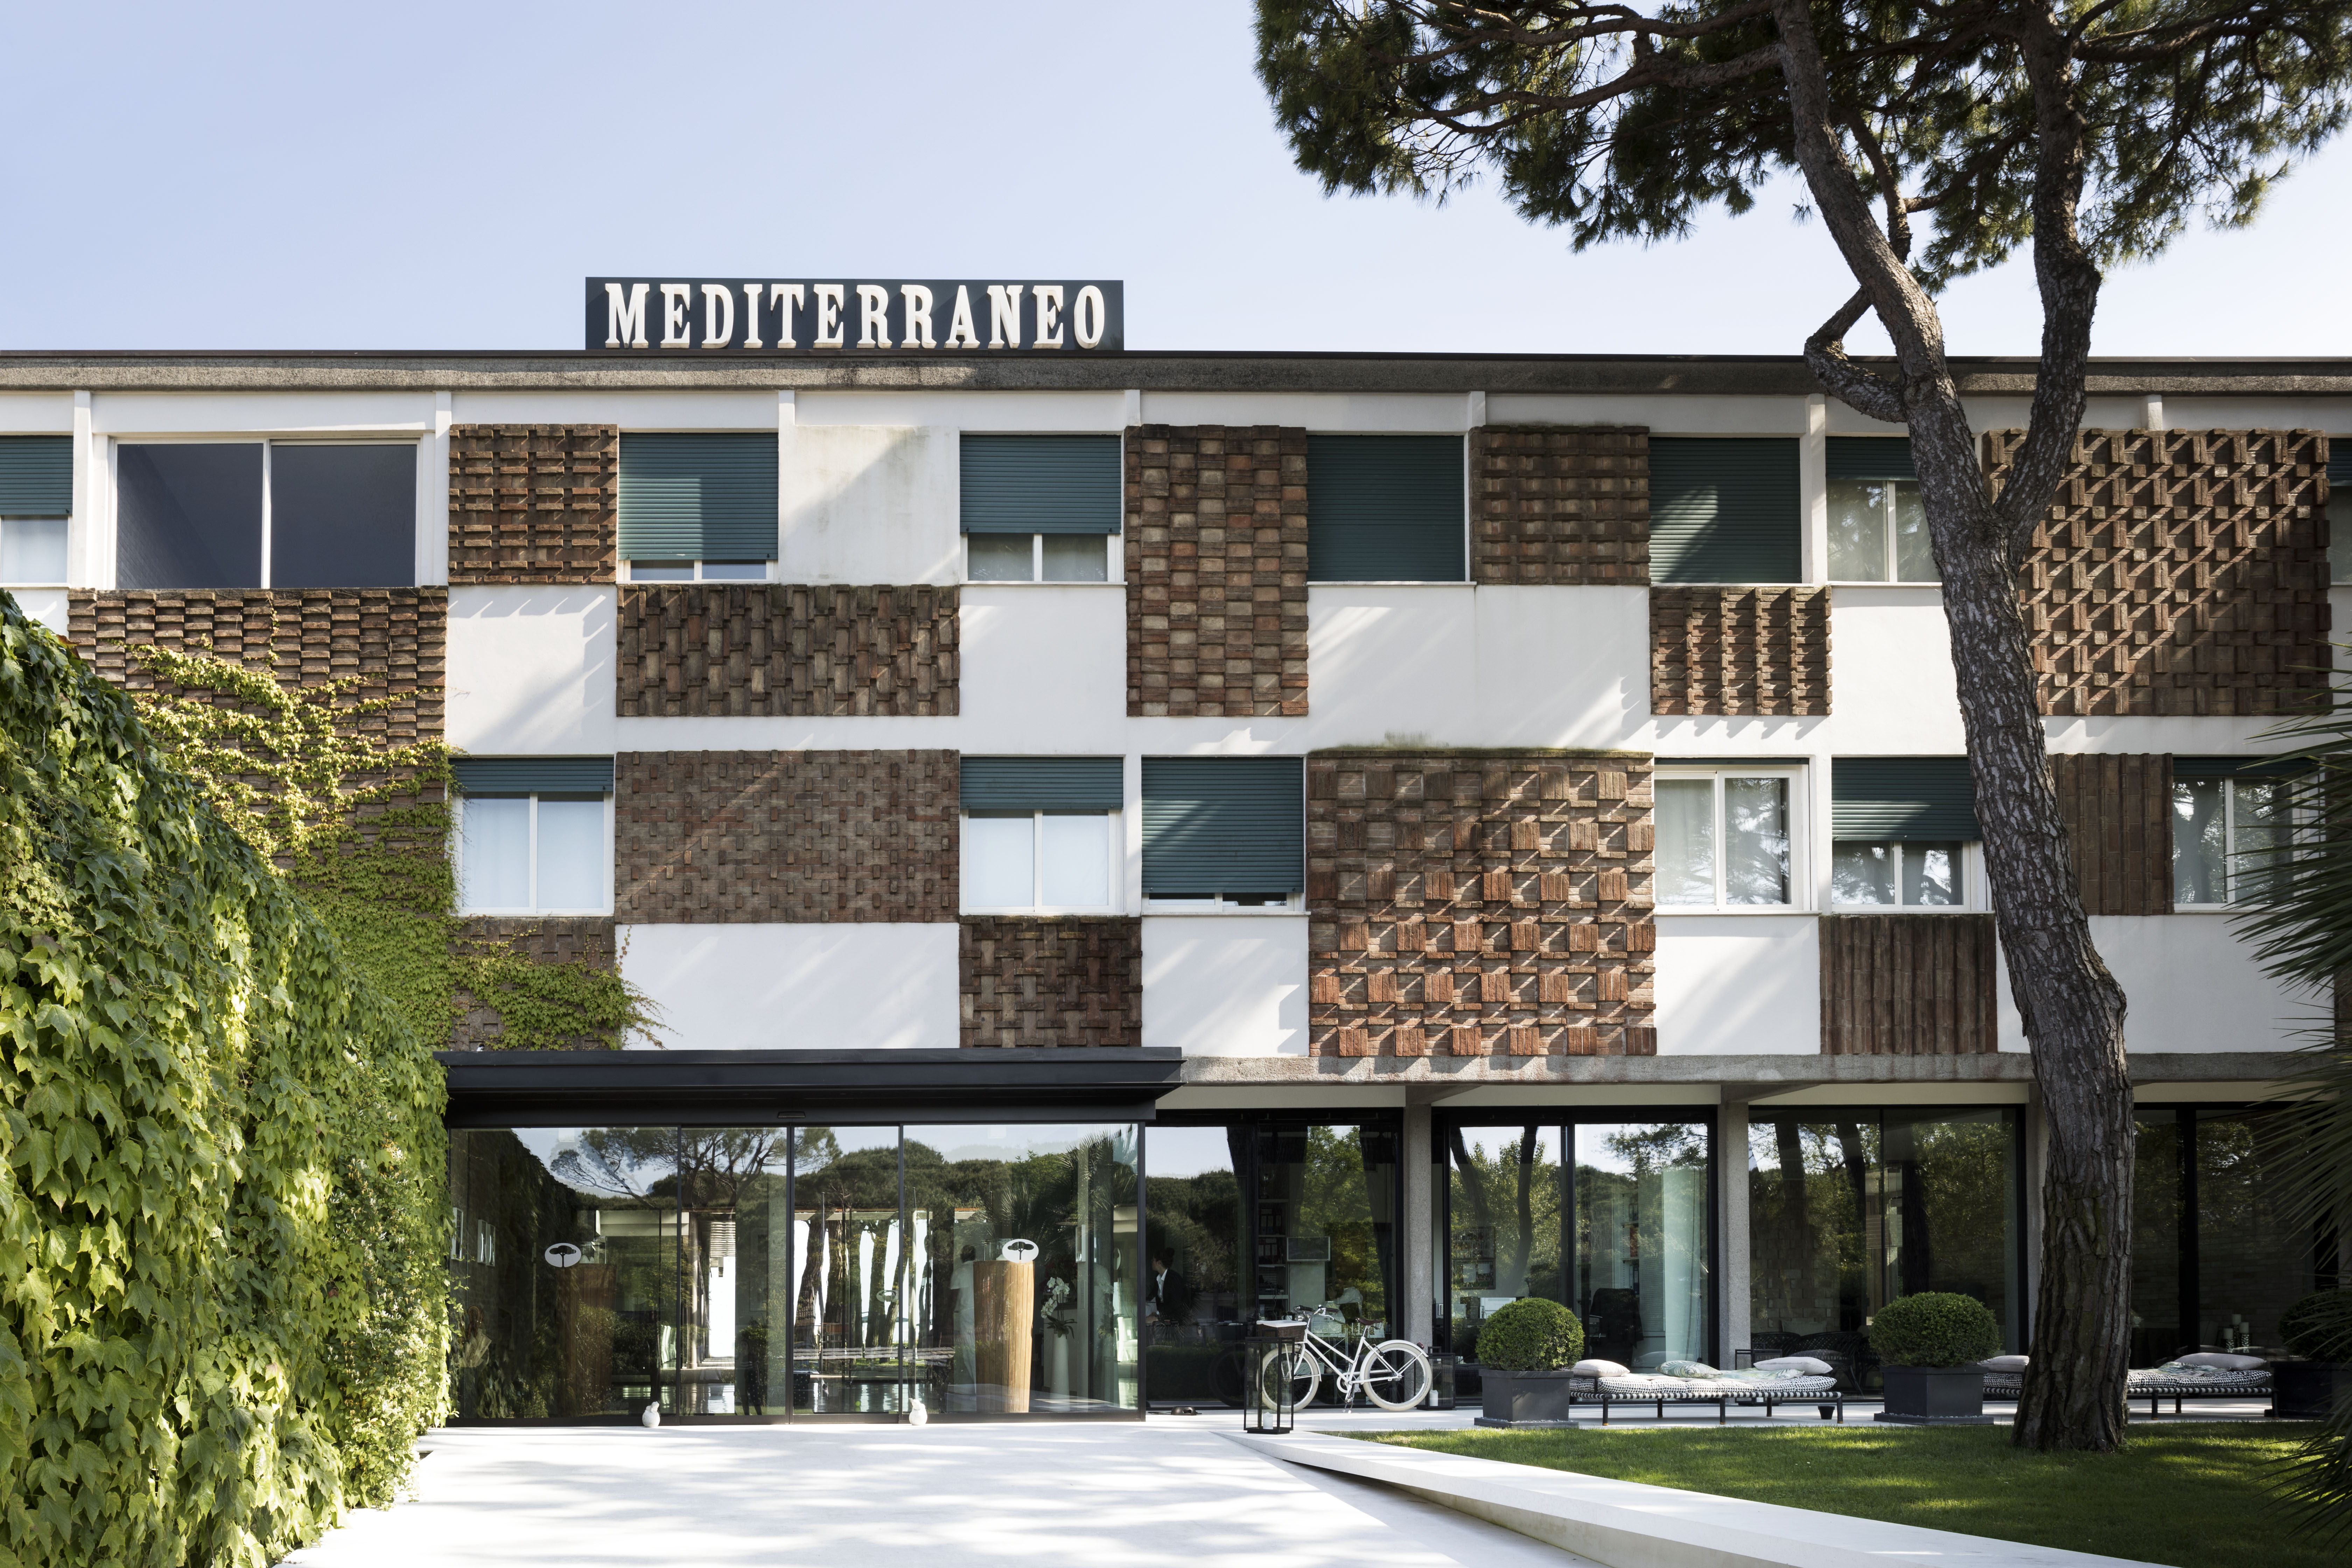 Hotel Mediterraneo, the main facade. Photo by Alberto Strada